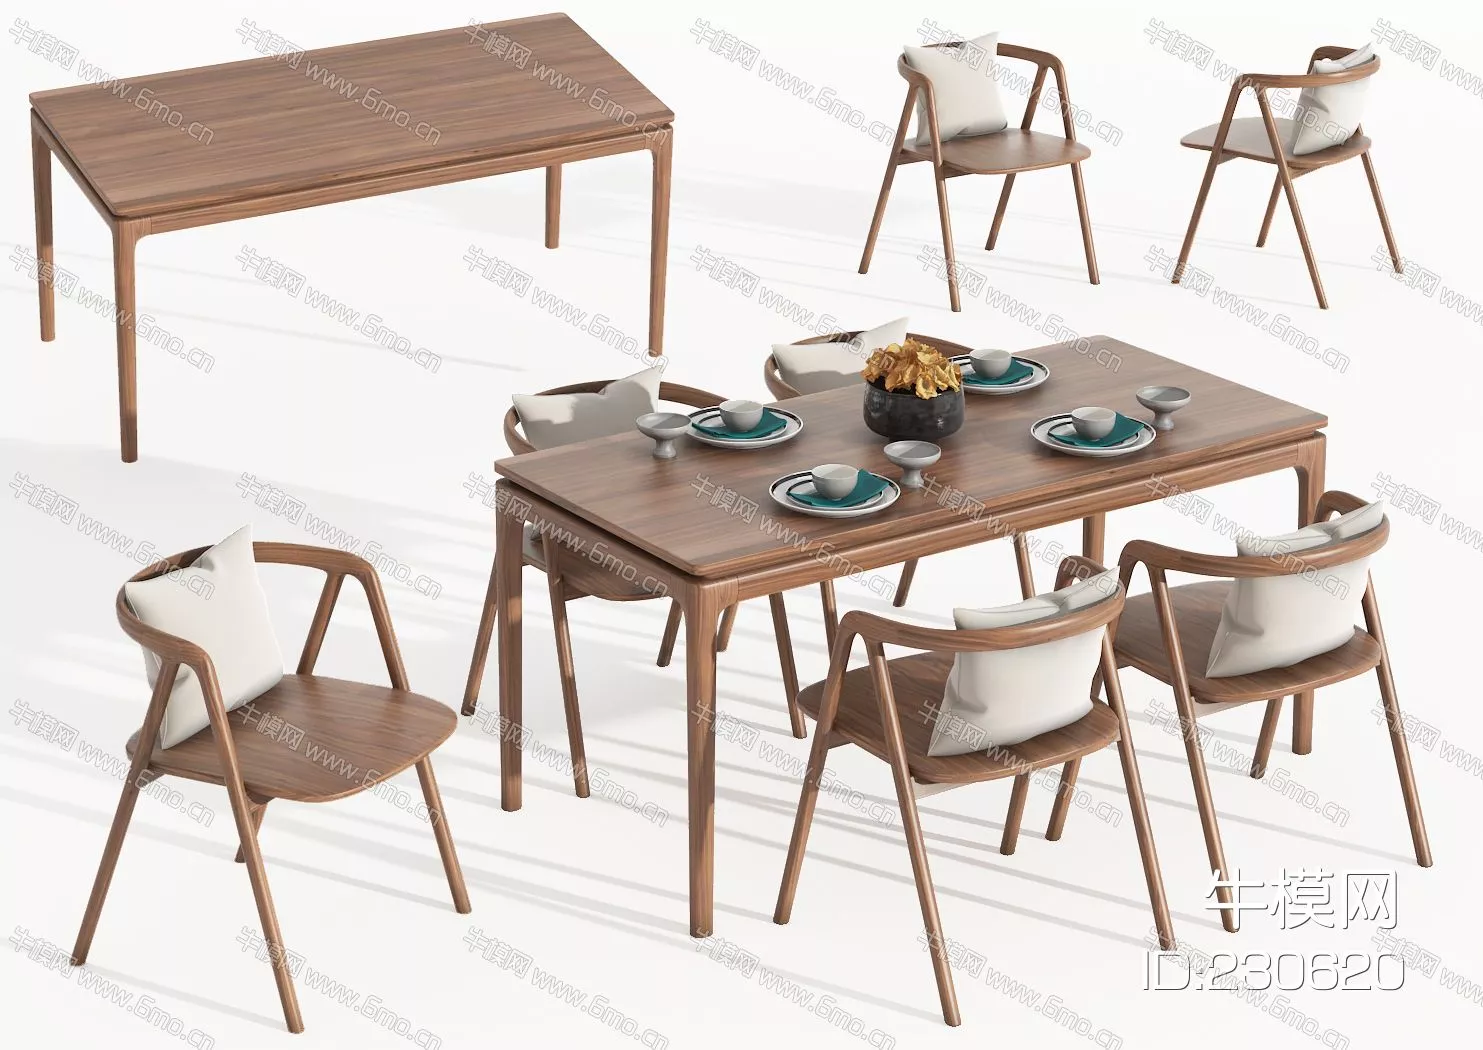 MODERN DINING TABLE SET - SKETCHUP 3D MODEL - VRAY - 230620